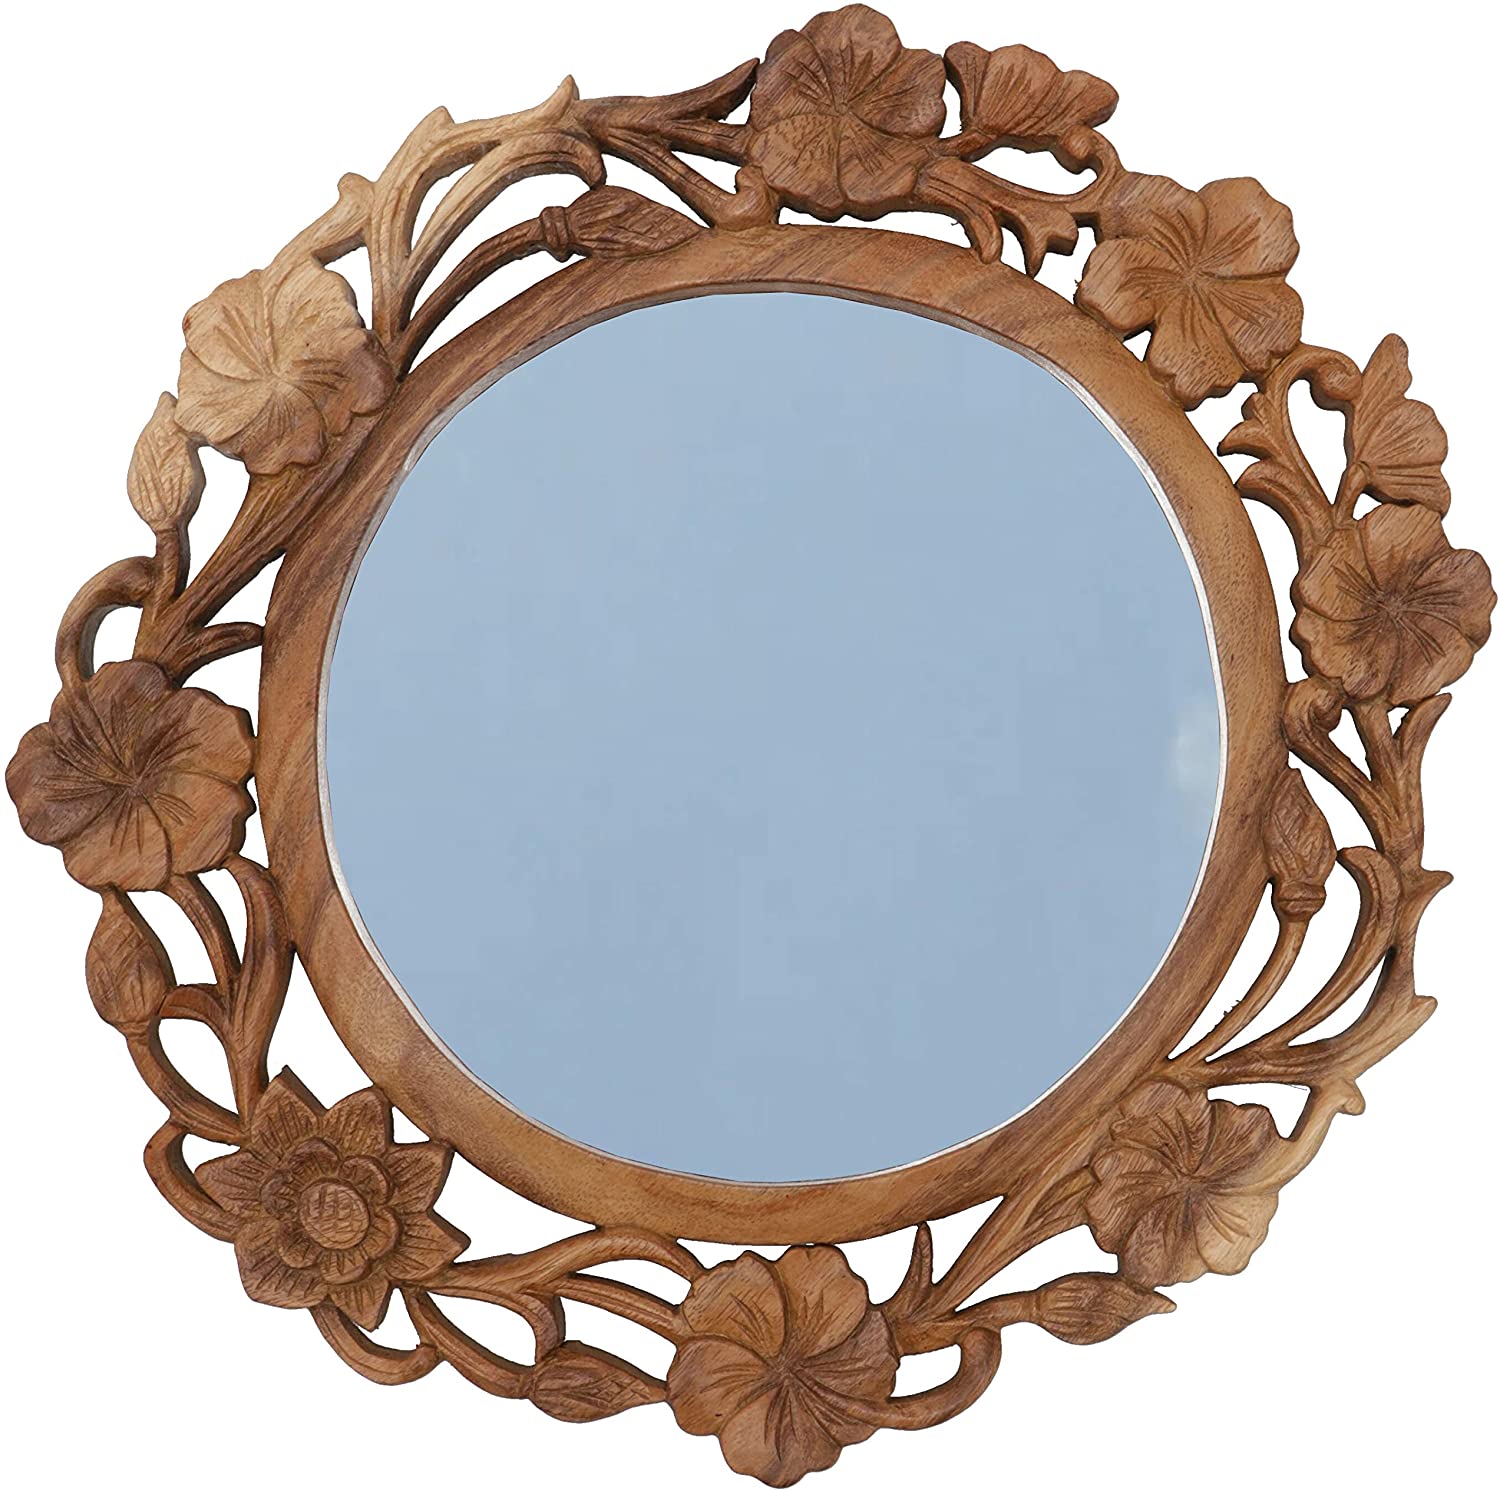 Guru-Shop Decorative Mirror with Carved Flower Ornaments Brown 38 x 38 x 2 